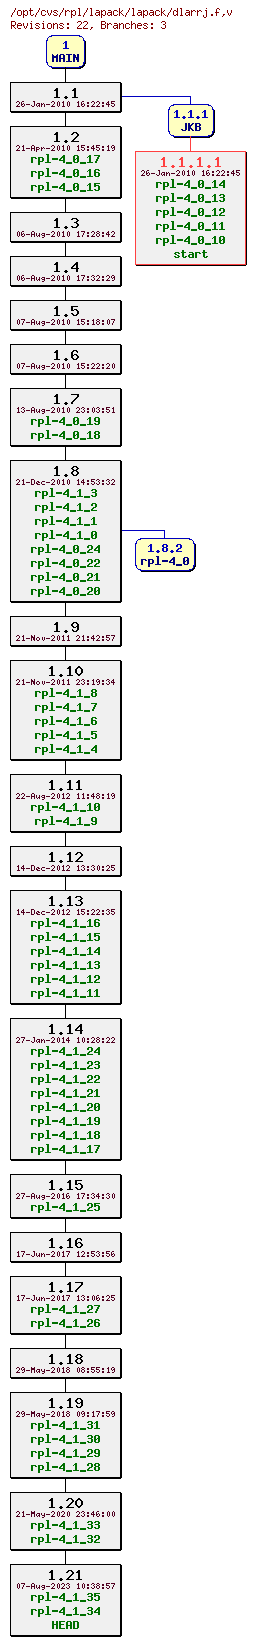 Revision graph of rpl/lapack/lapack/dlarrj.f